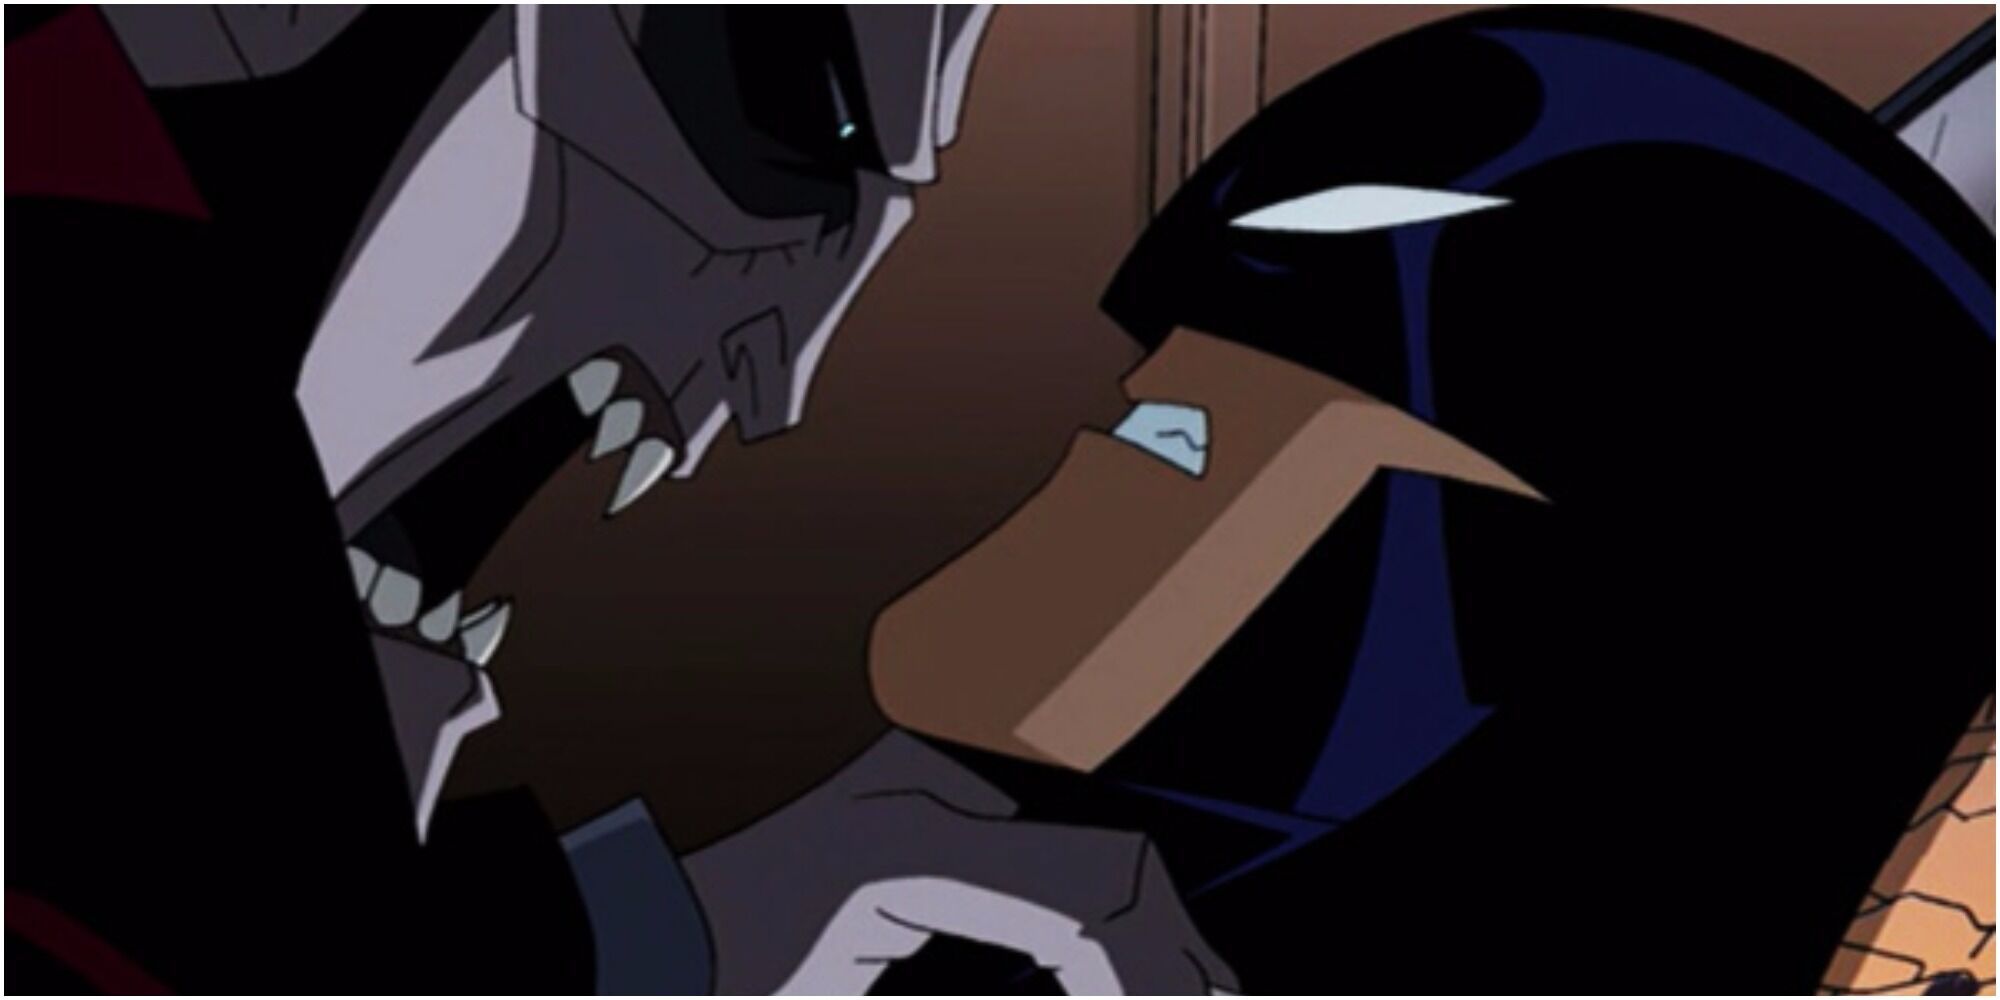 Batman vs Dracula fighting in the animated movie